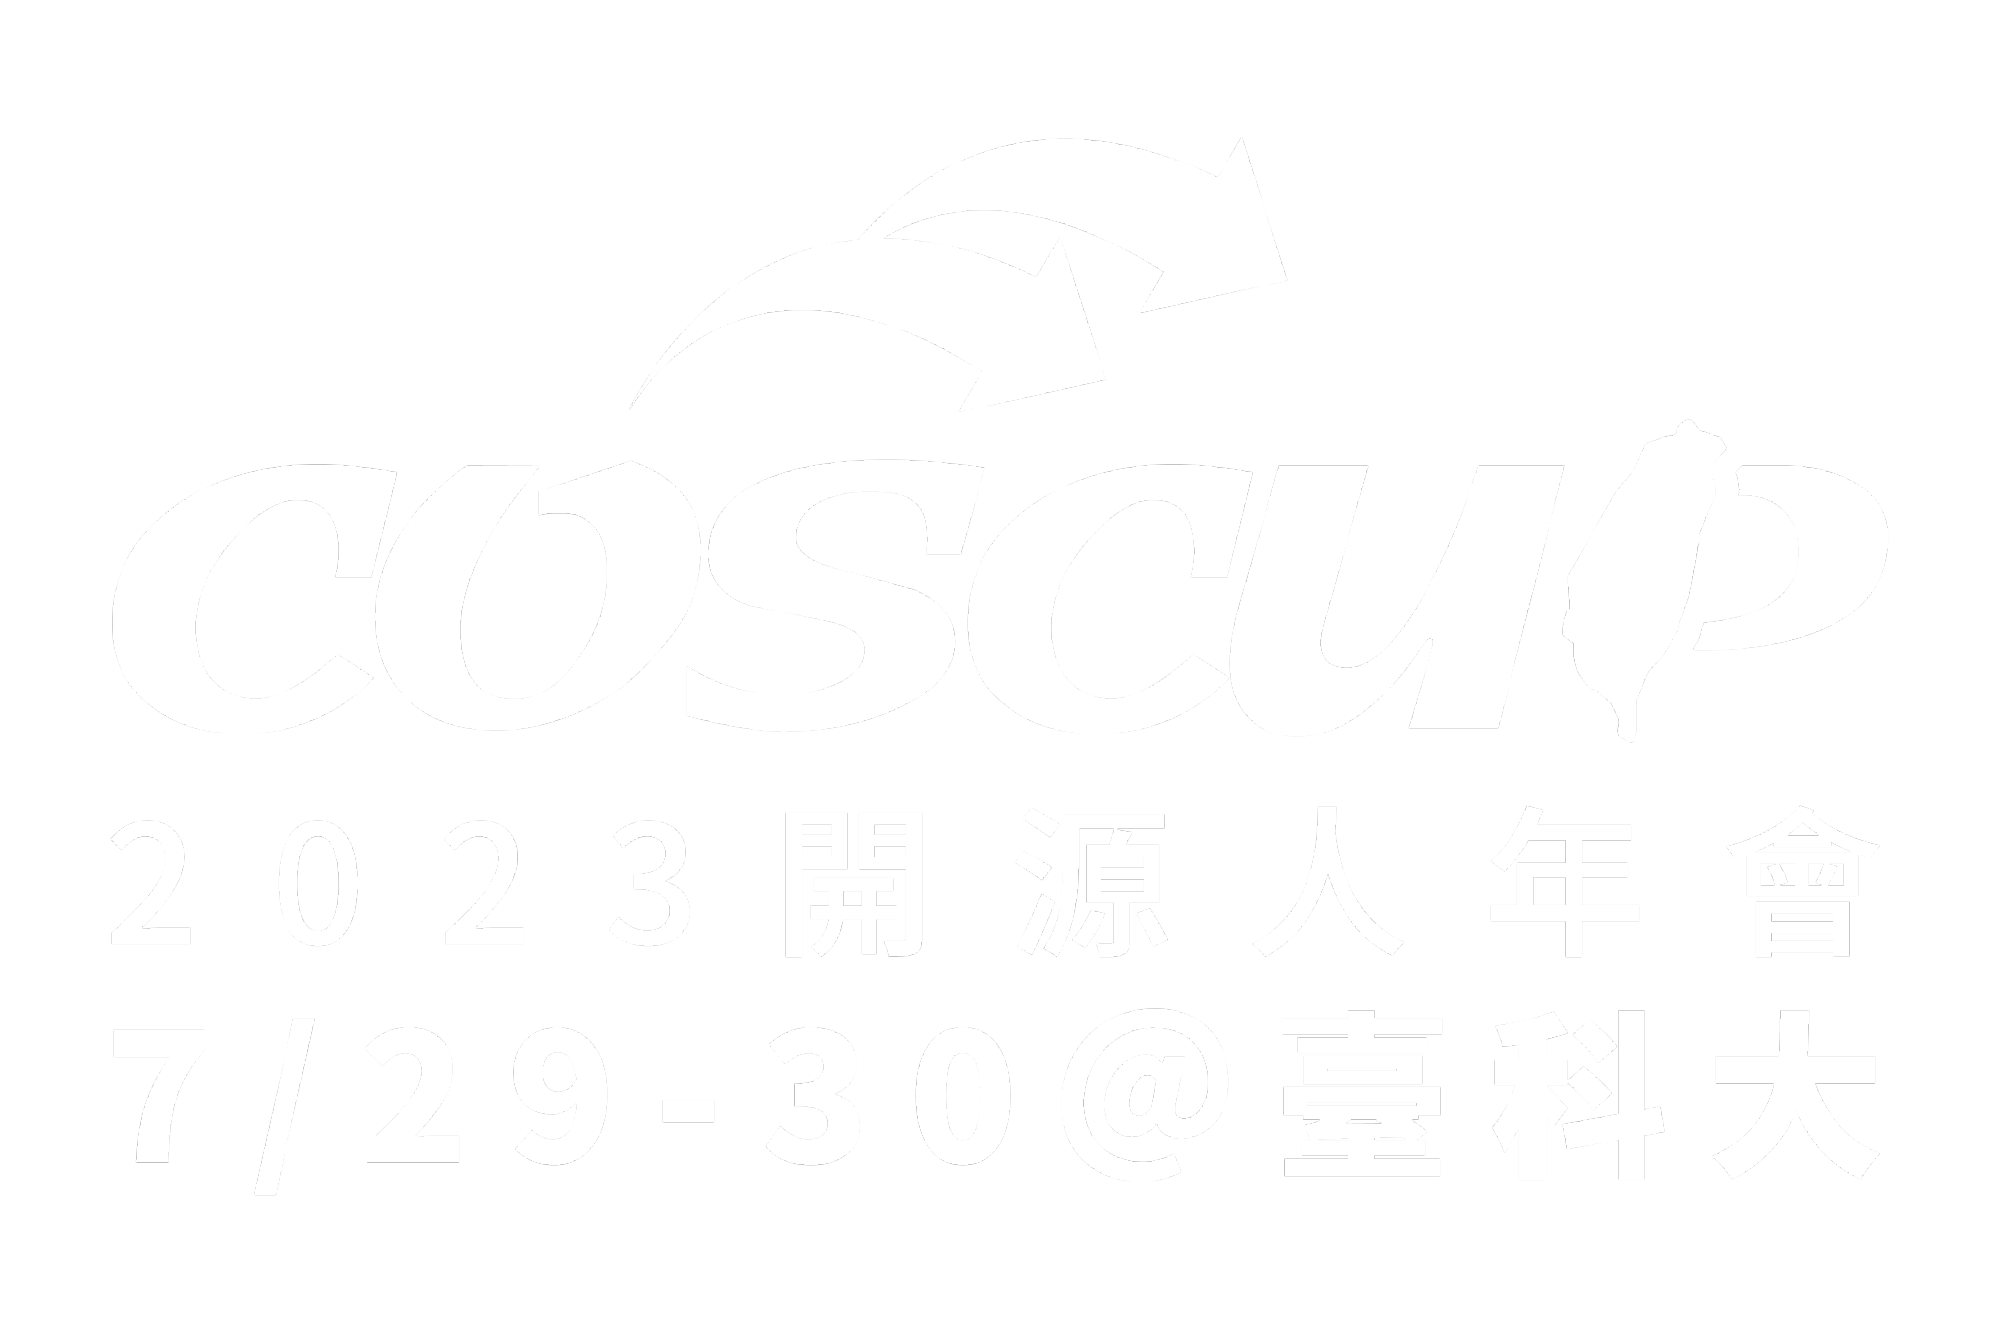 COSCUP x KCD Taiwan 2023 Sponsorship Program